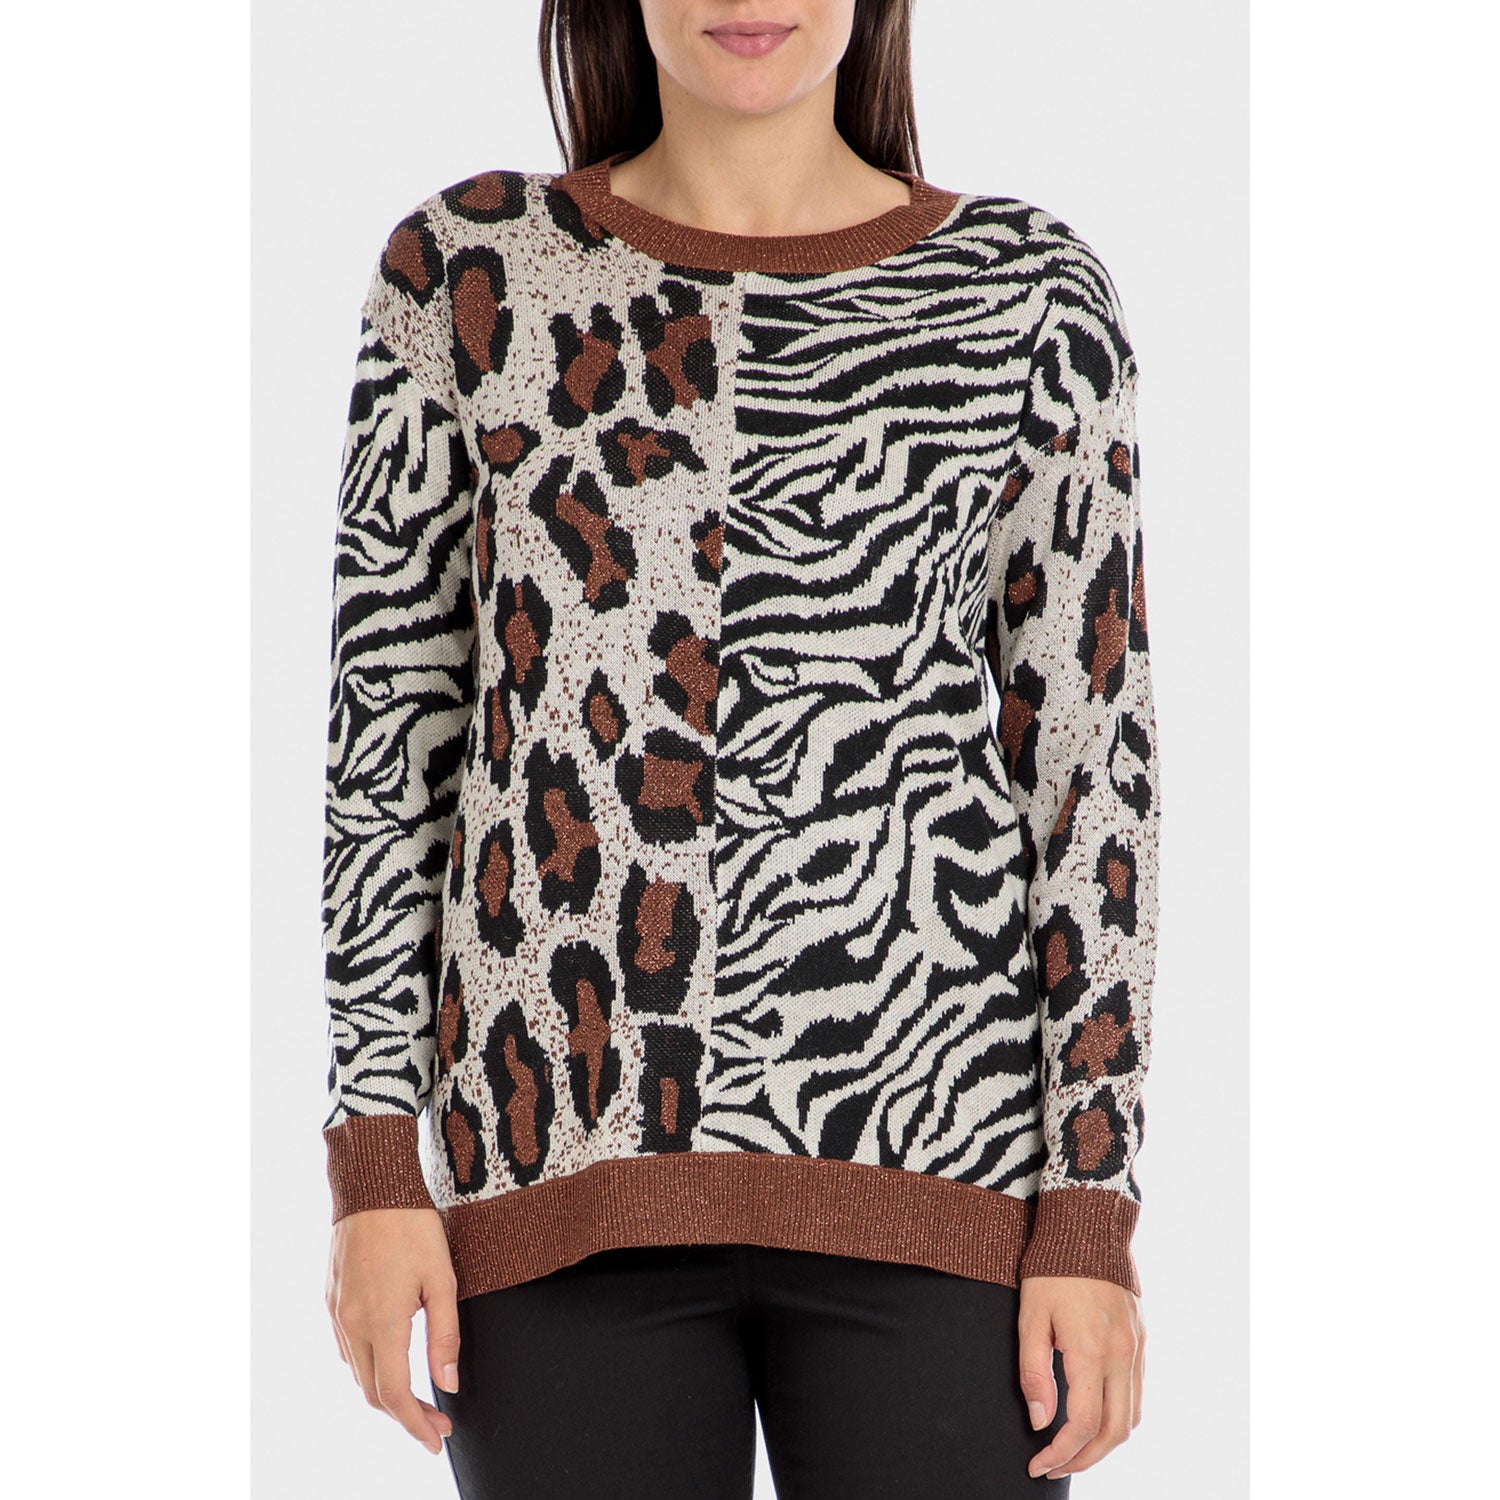 Punt Roma Animal Print Sweater - Beige 1 Shaws Department Stores